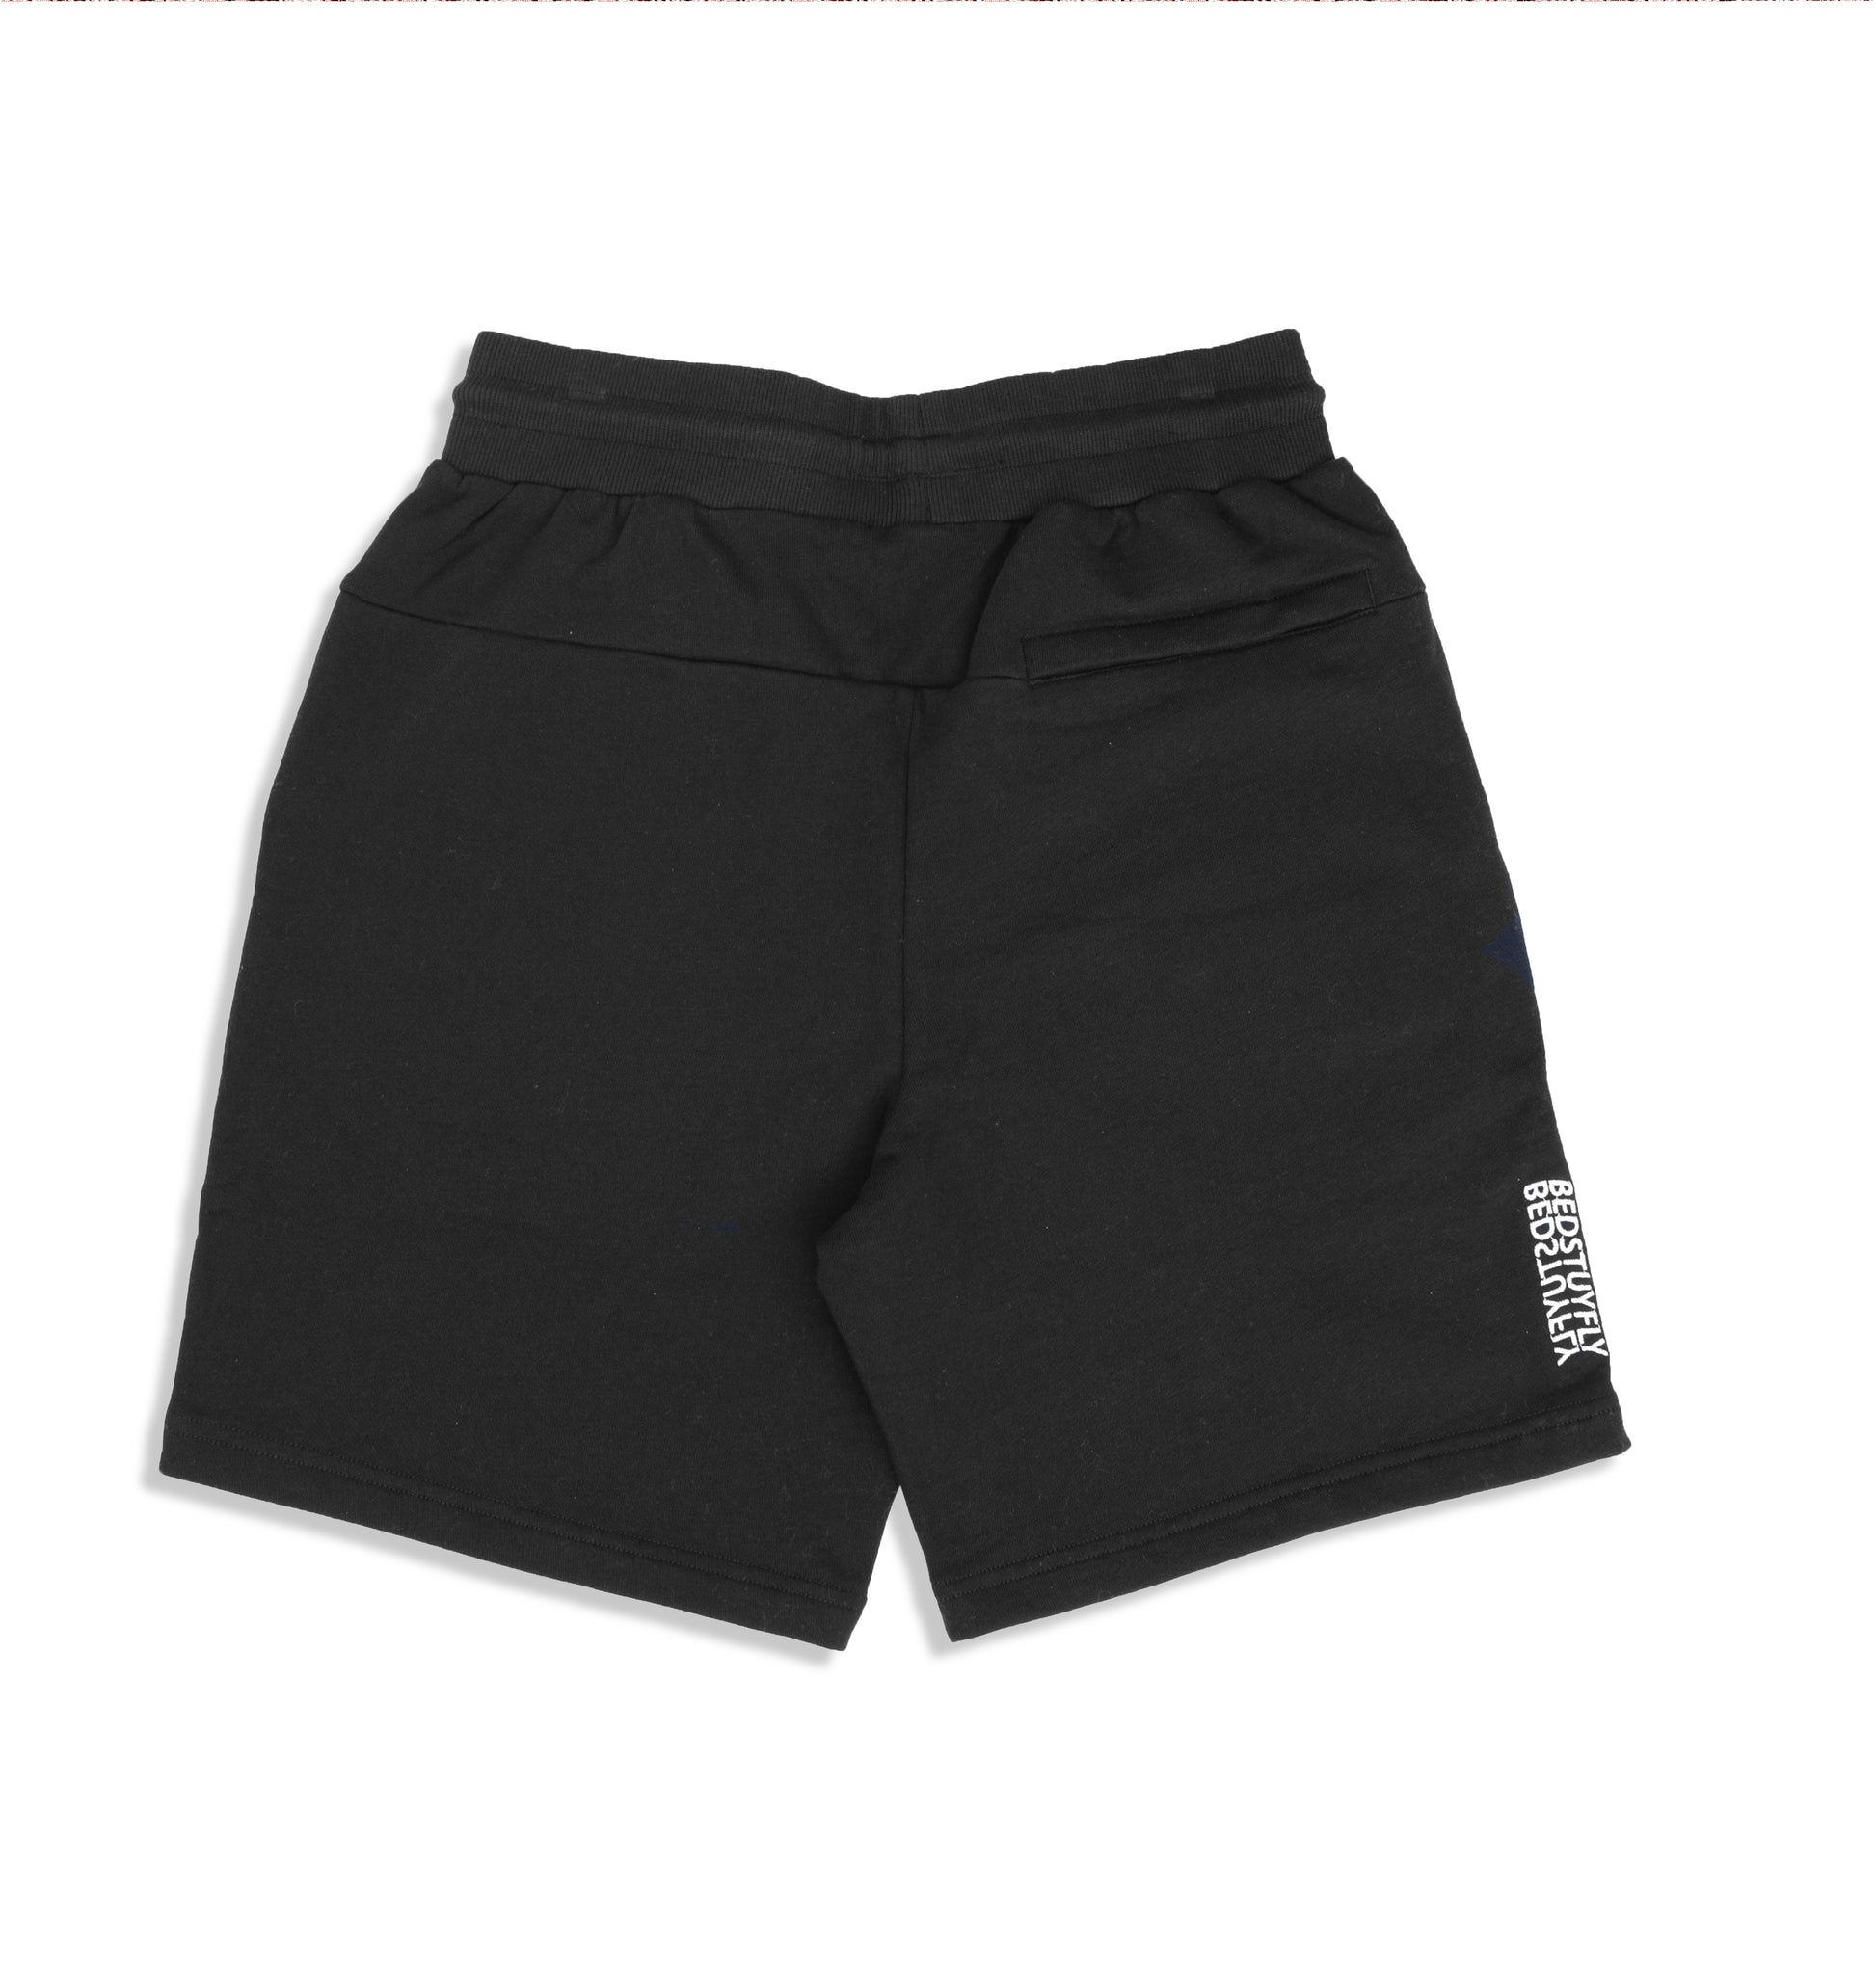 Park Shorts (Black) - Bedstuyfly